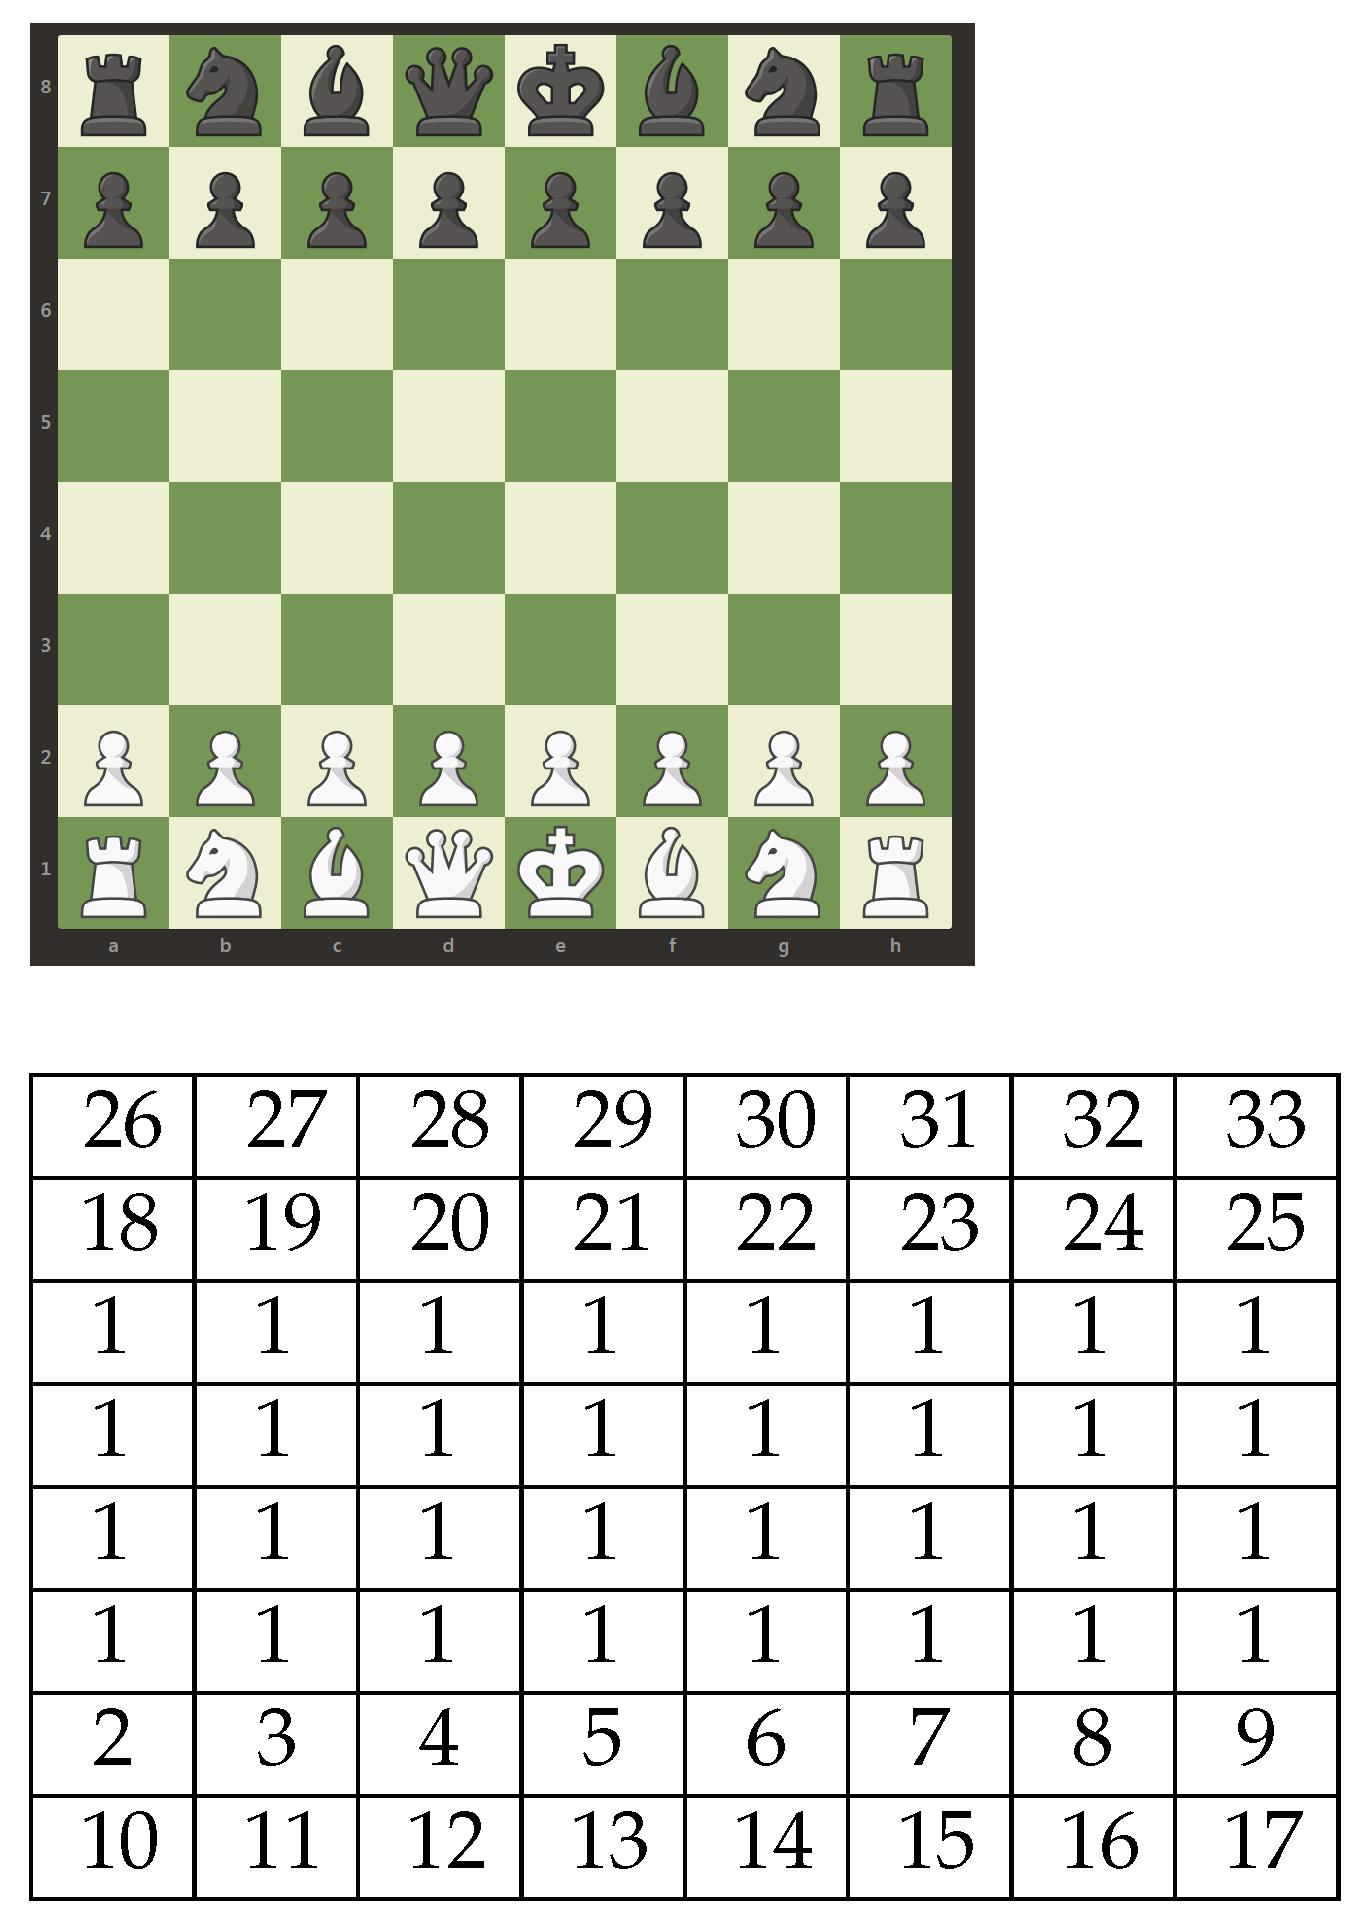 King's Bizarre Chess Match : r/memes